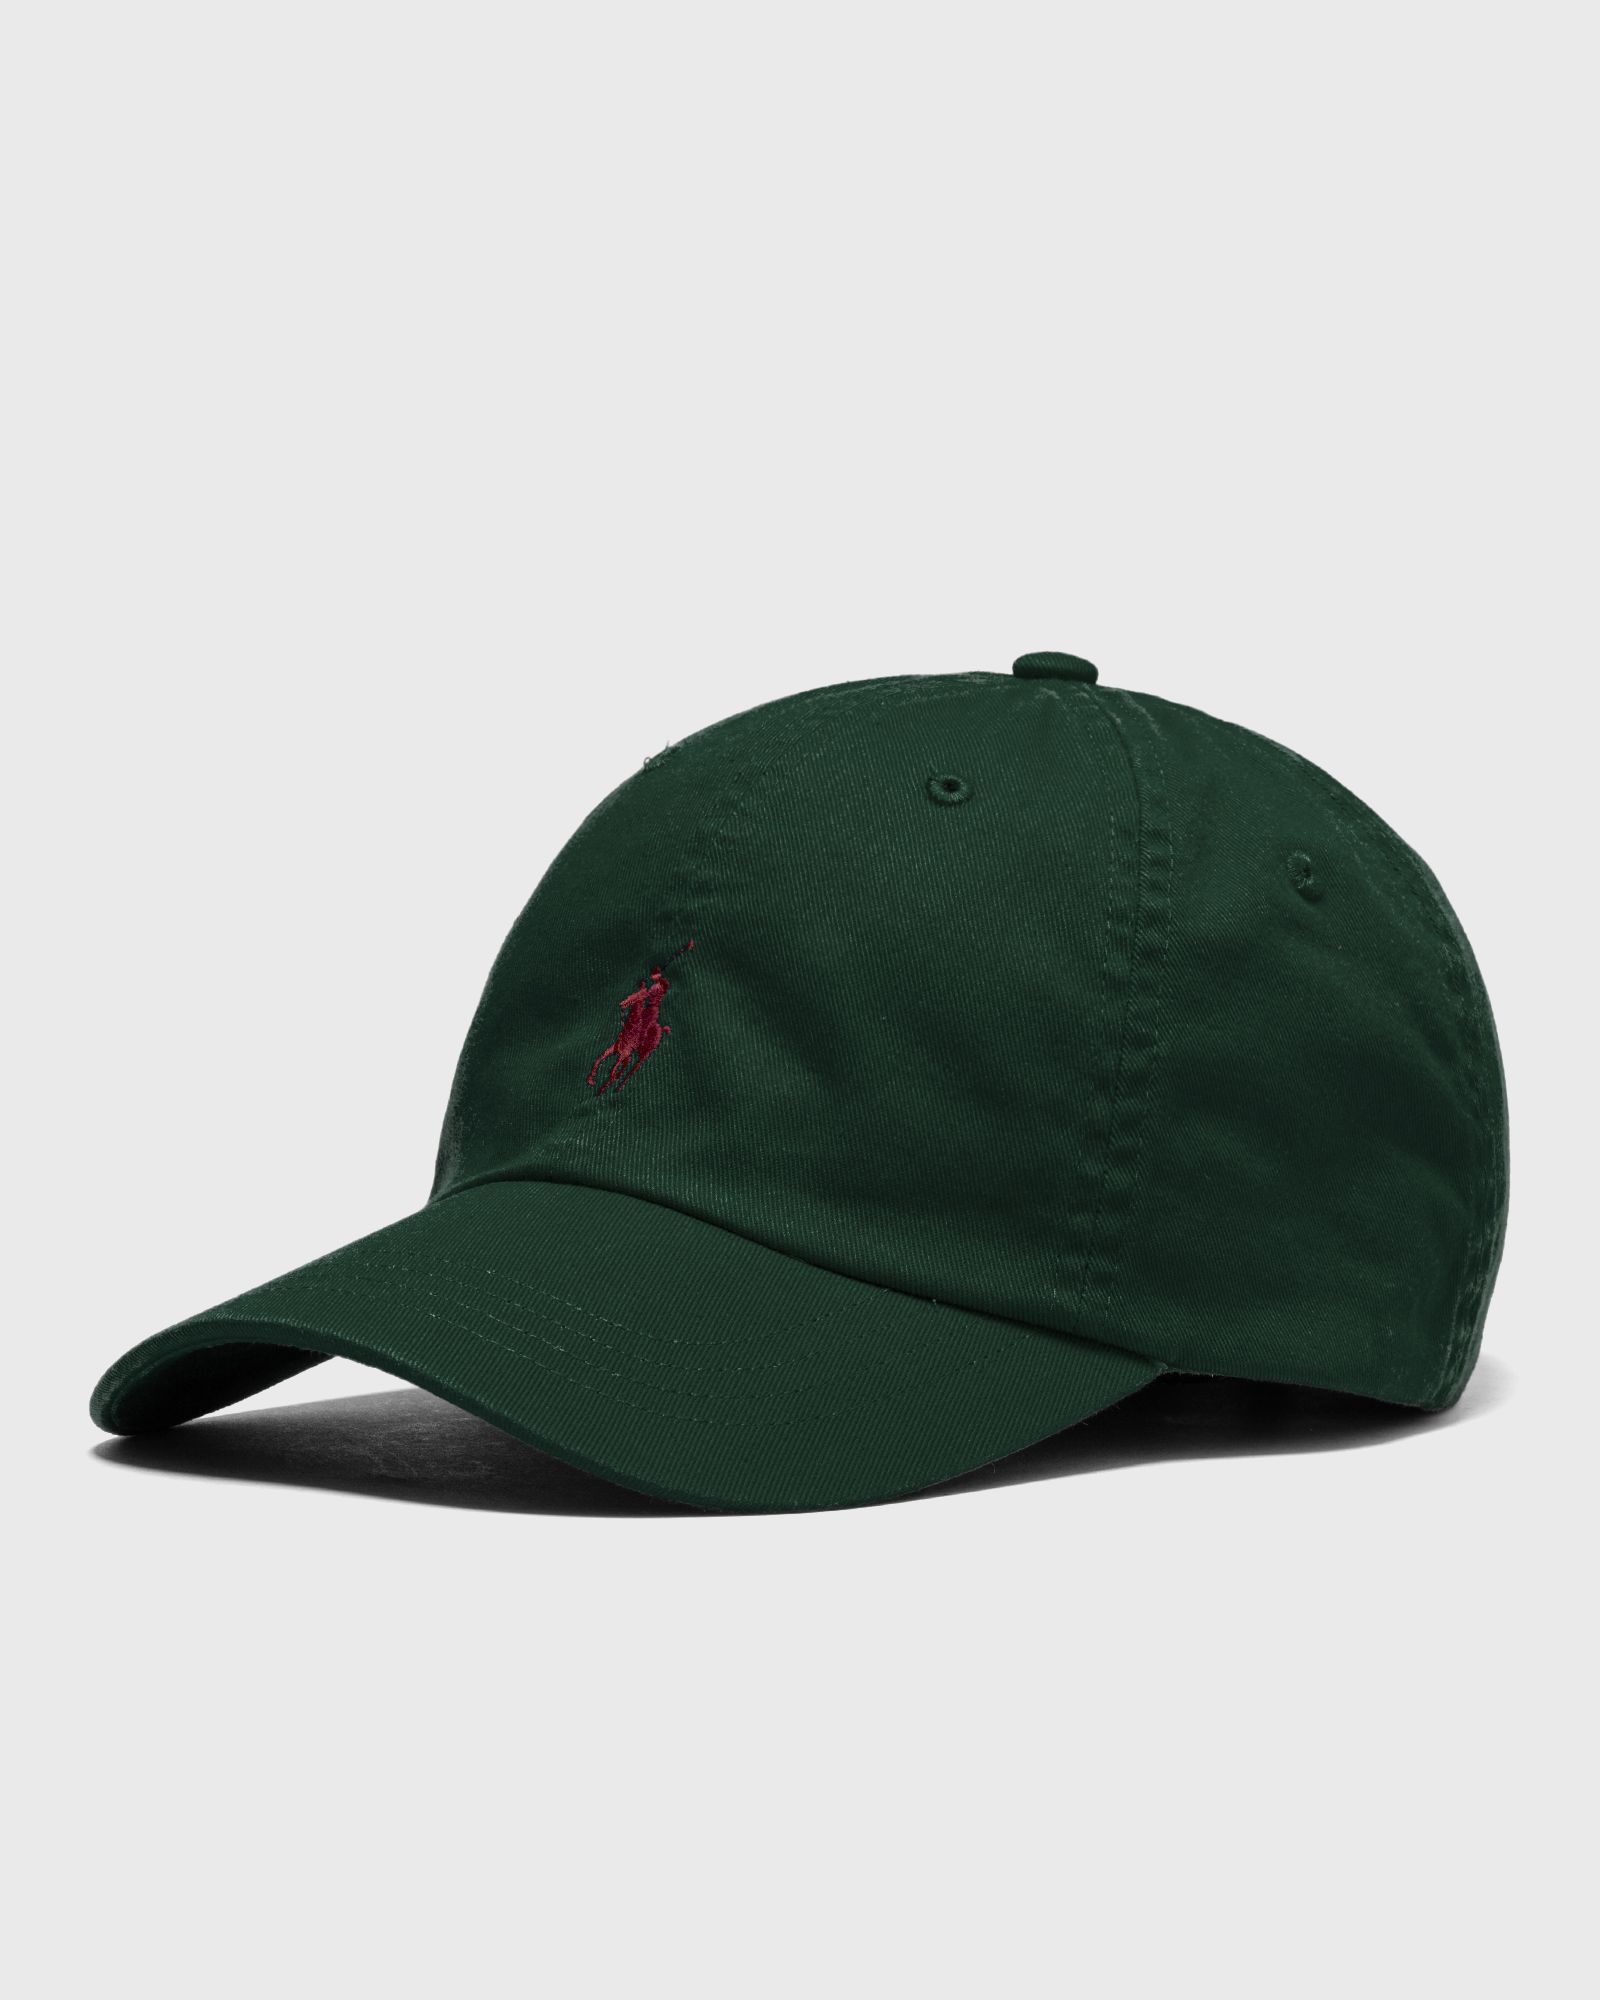 Polo Ralph Lauren - cls sport cap men caps green in größe:one size